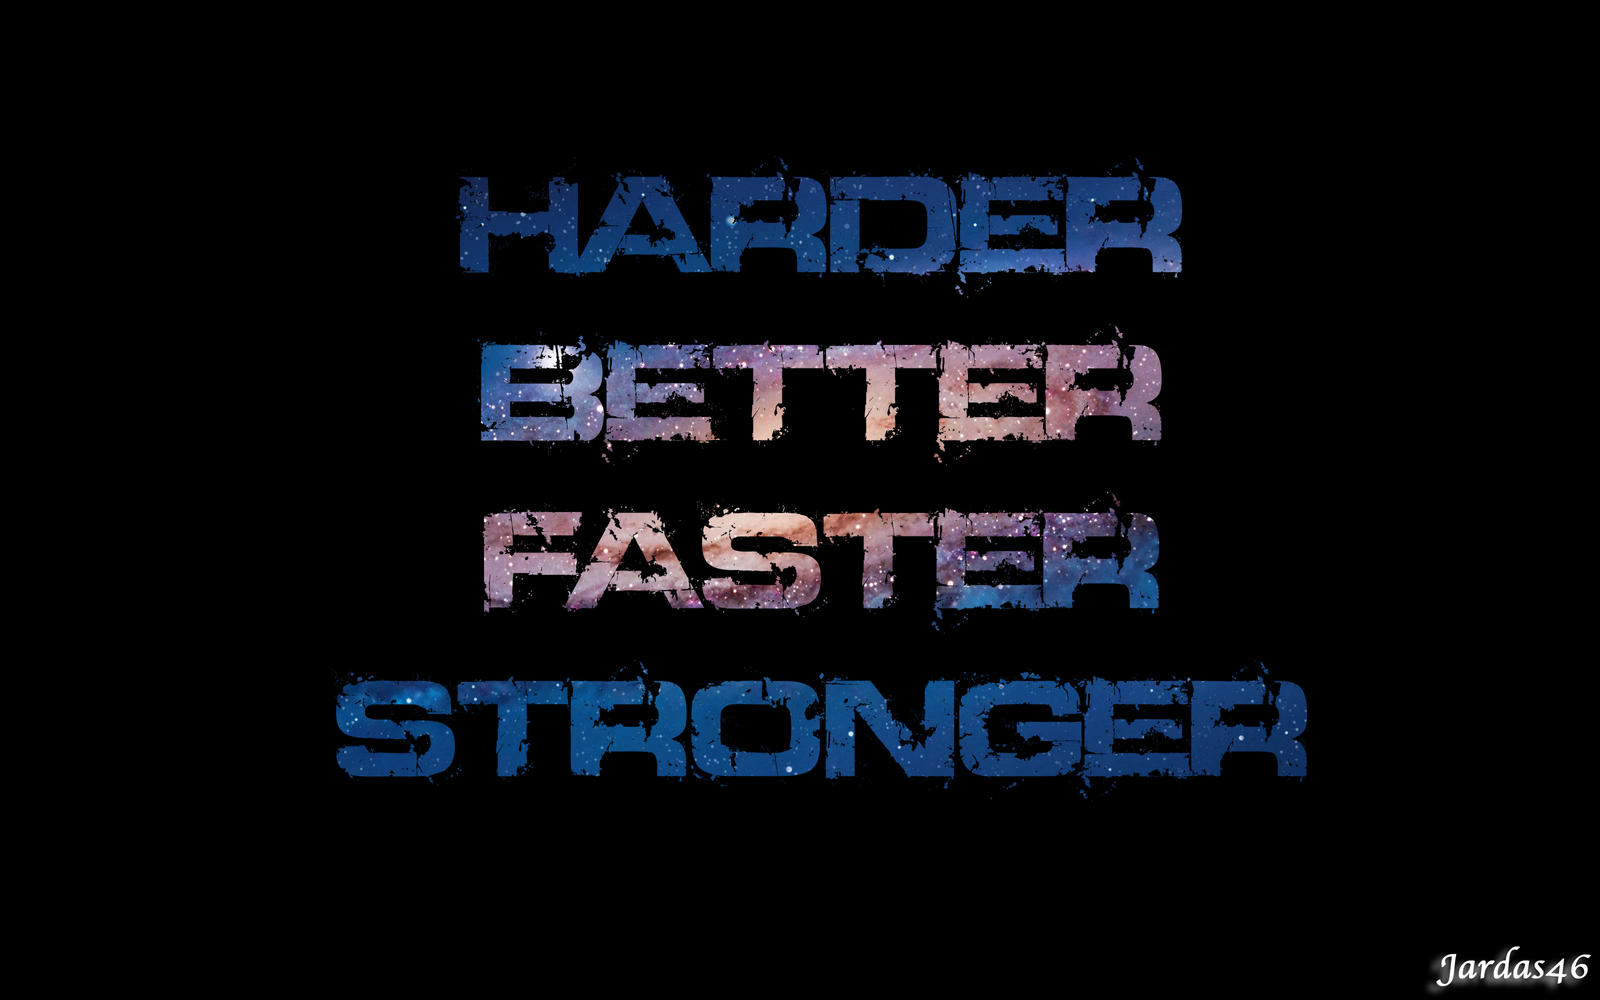 Faster stronger песня ремикс. Better faster. Harder, better, faster, stronger Daft Punk. Хардер беттер Фастер стронгер. Faster and harder текст